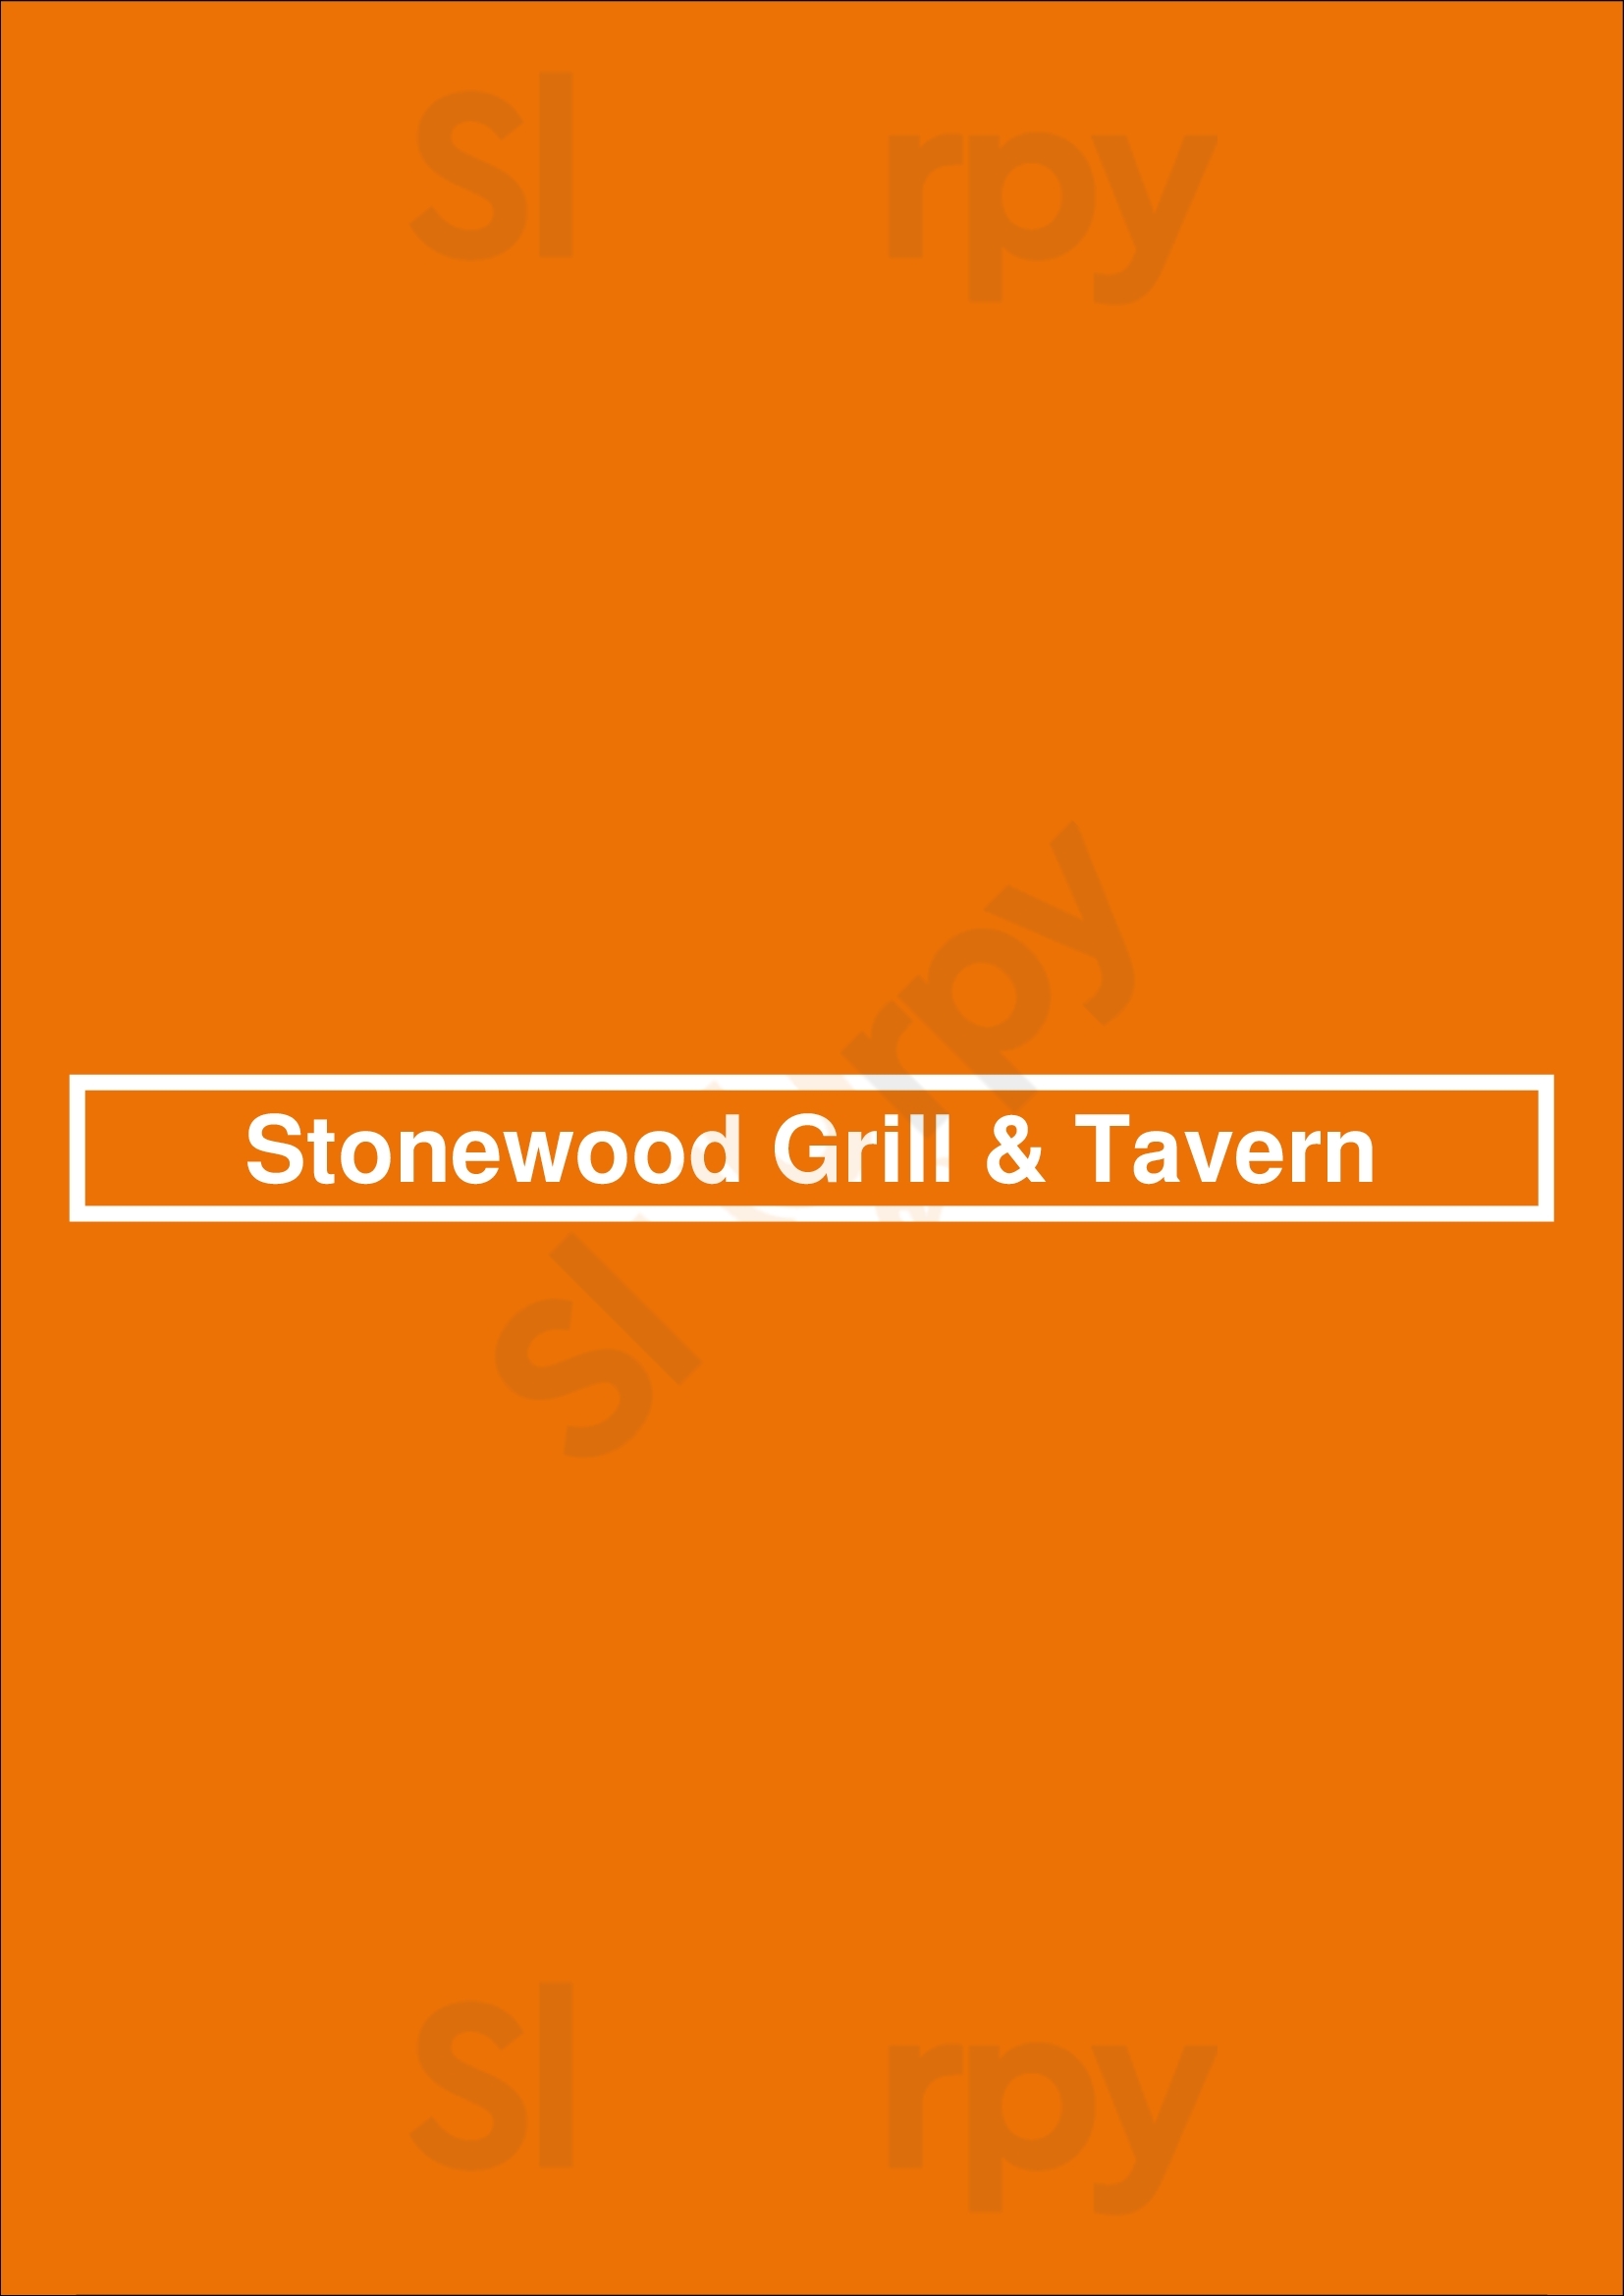 Stonewood Grill & Tavern Ormond Beach Menu - 1